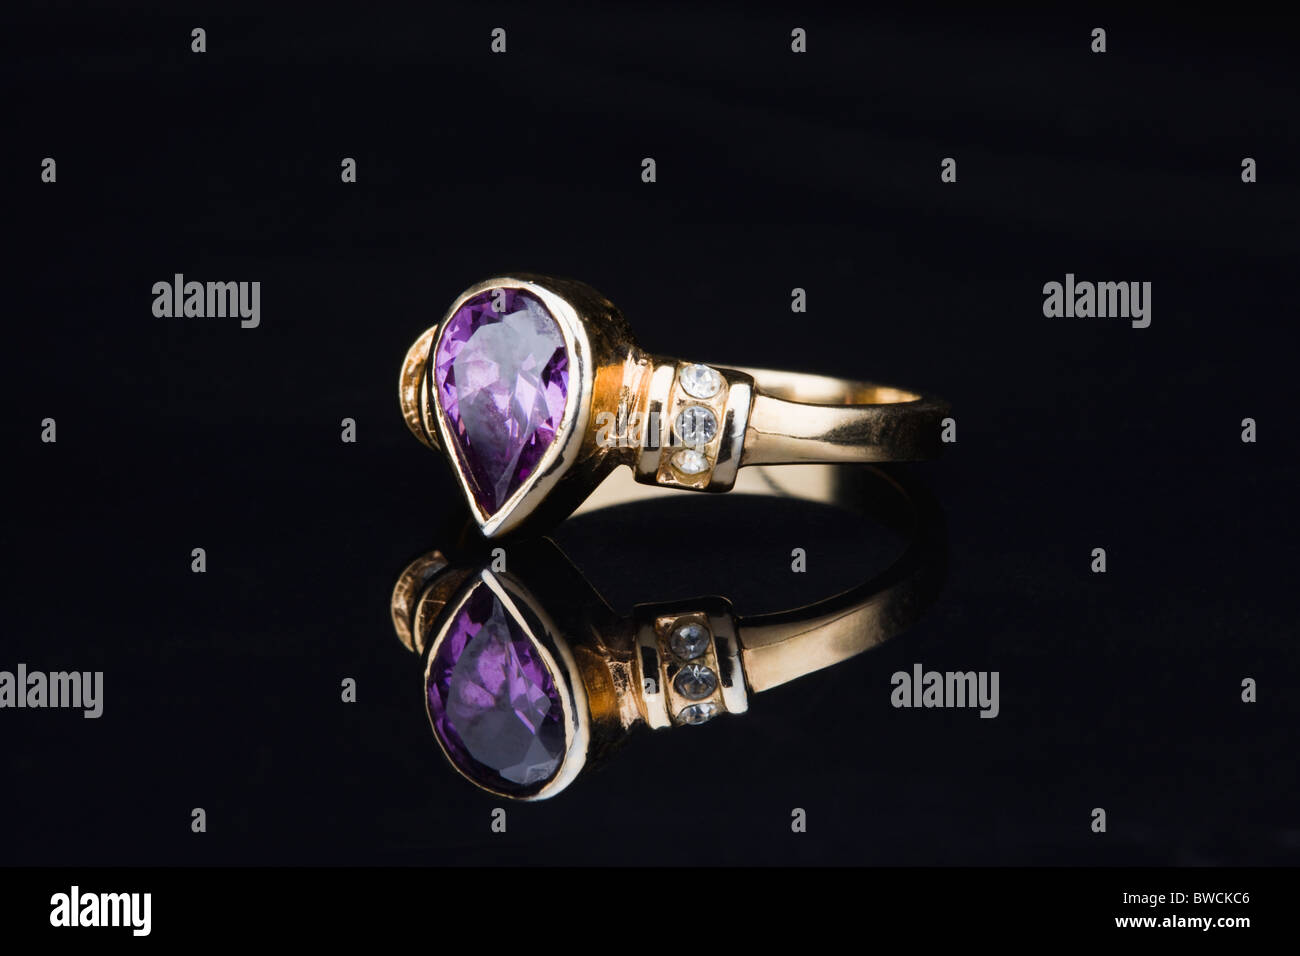 USA, Illinois, Metamora, Gemstone ring on black background Stock Photo